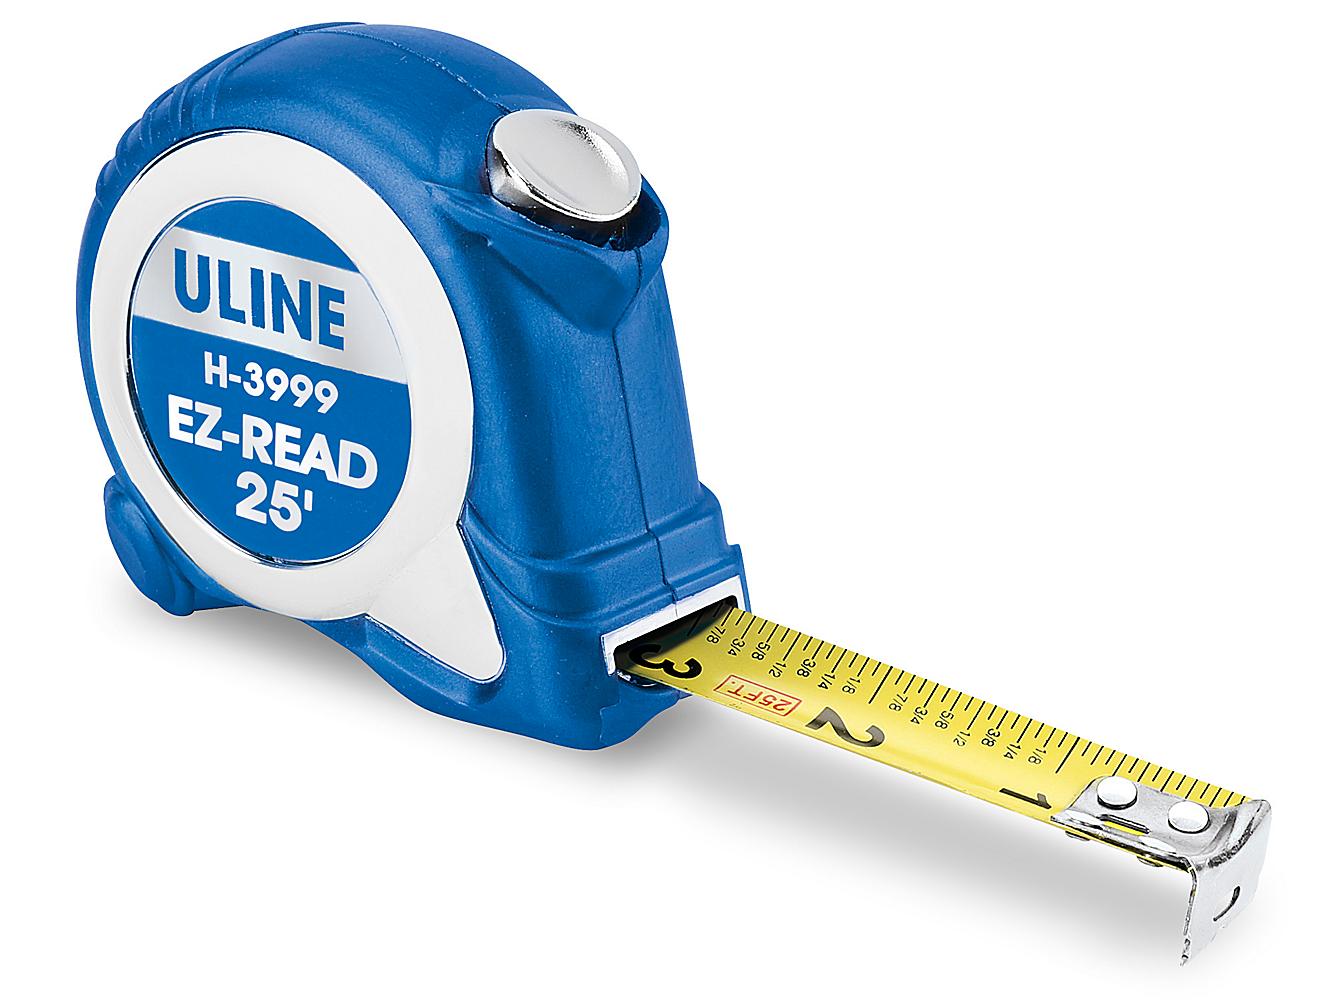 uline-ez-read-tape-measure-1-x-25-h-3999-uline